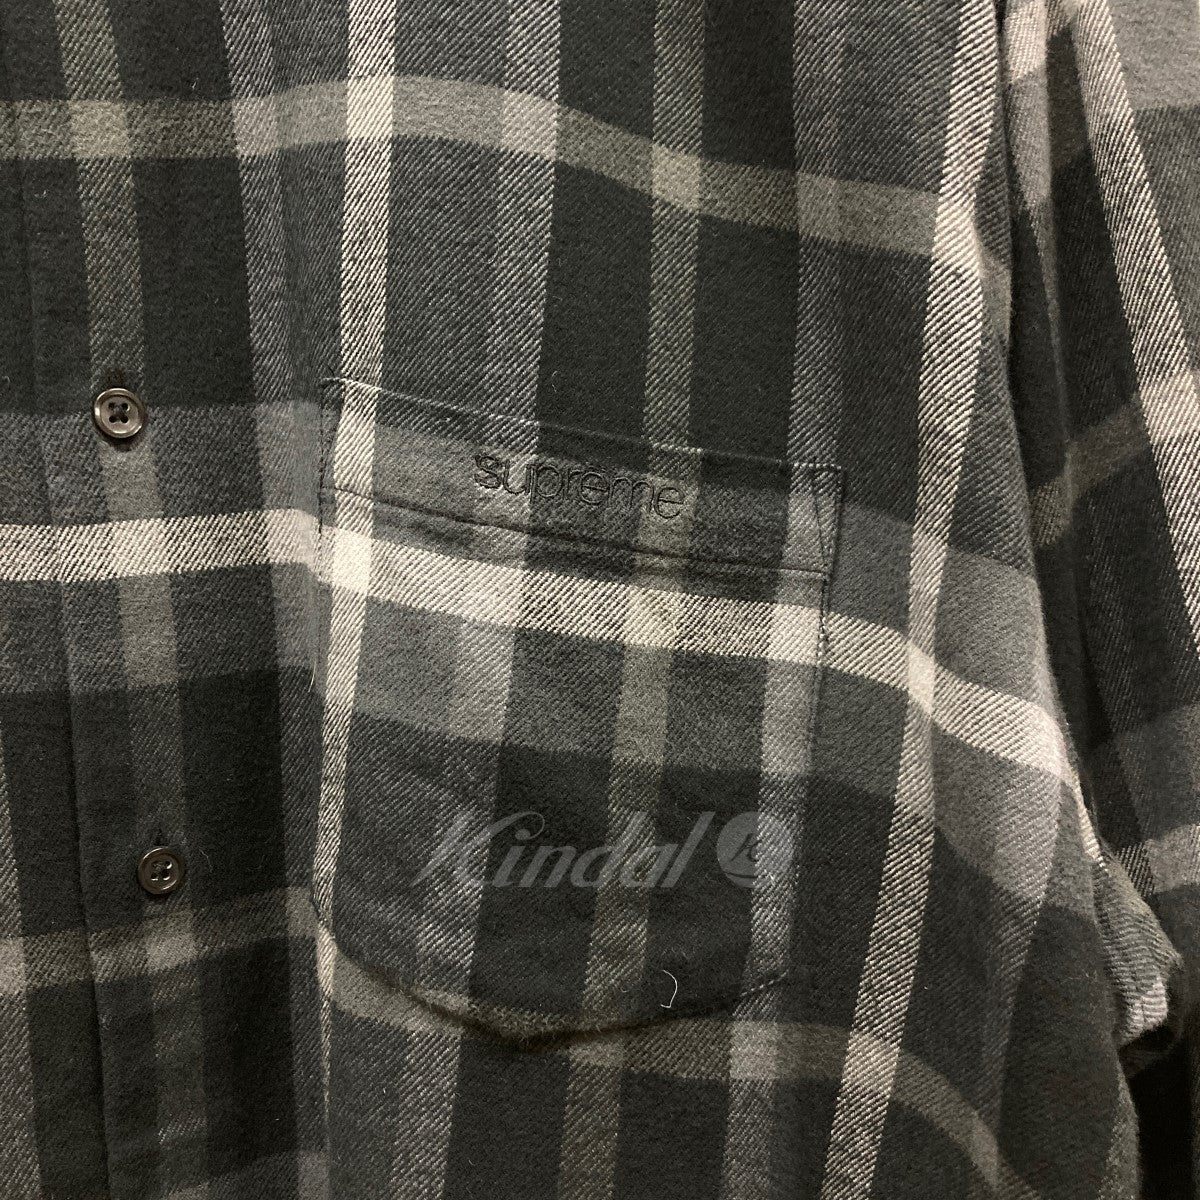 SUPREME(シュプリーム) 23AW 「Plaid Flannel Shirt」 チェック ...